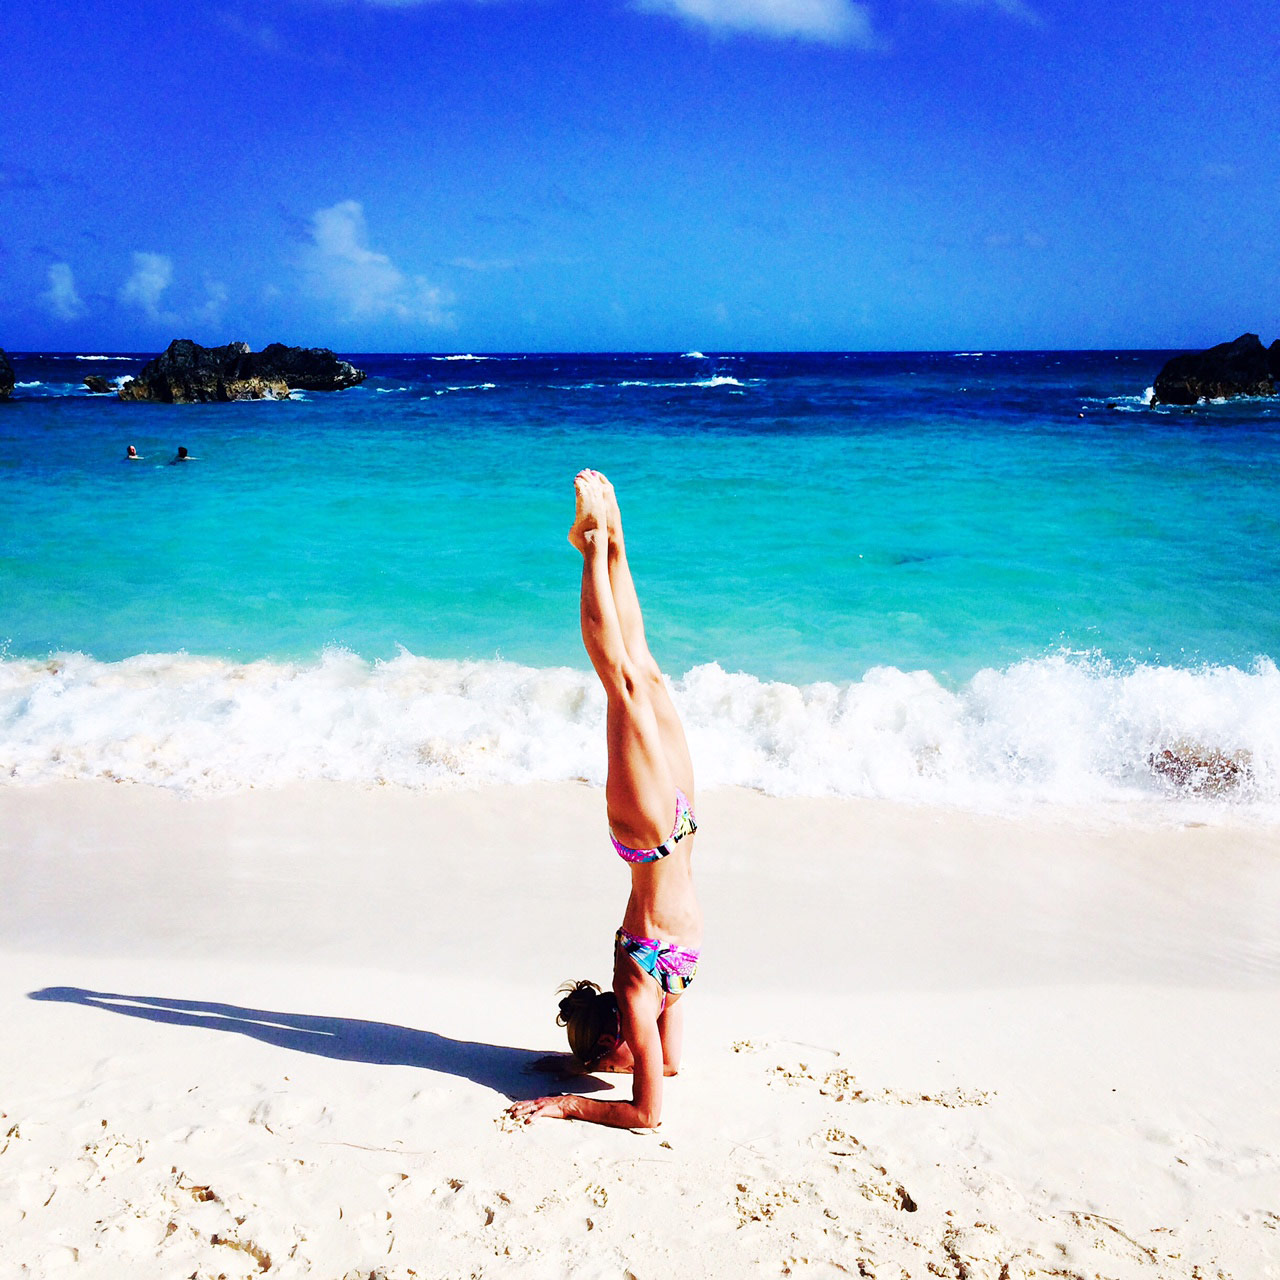 goldie oren doing solo yoga on the beach